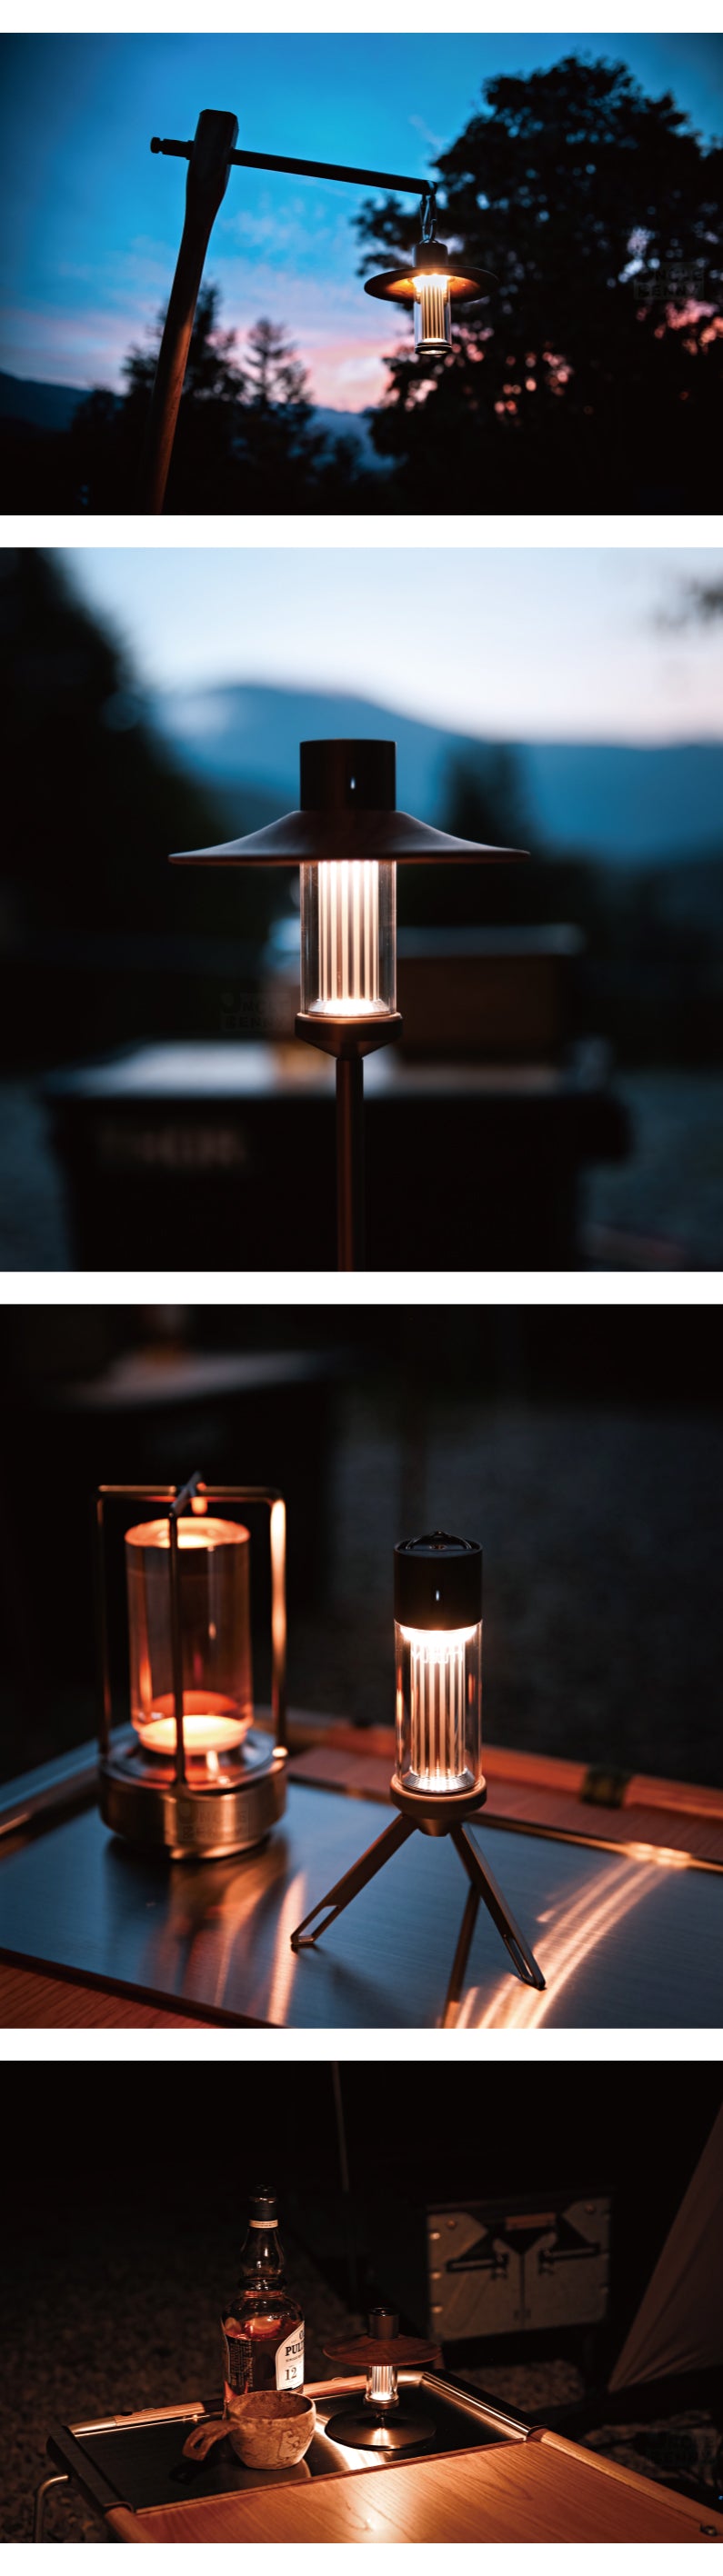 Lumena M3 桌燈超值套裝組-古銅棕色系 Table Lamp Package LUMENA M3 多功能LED燈